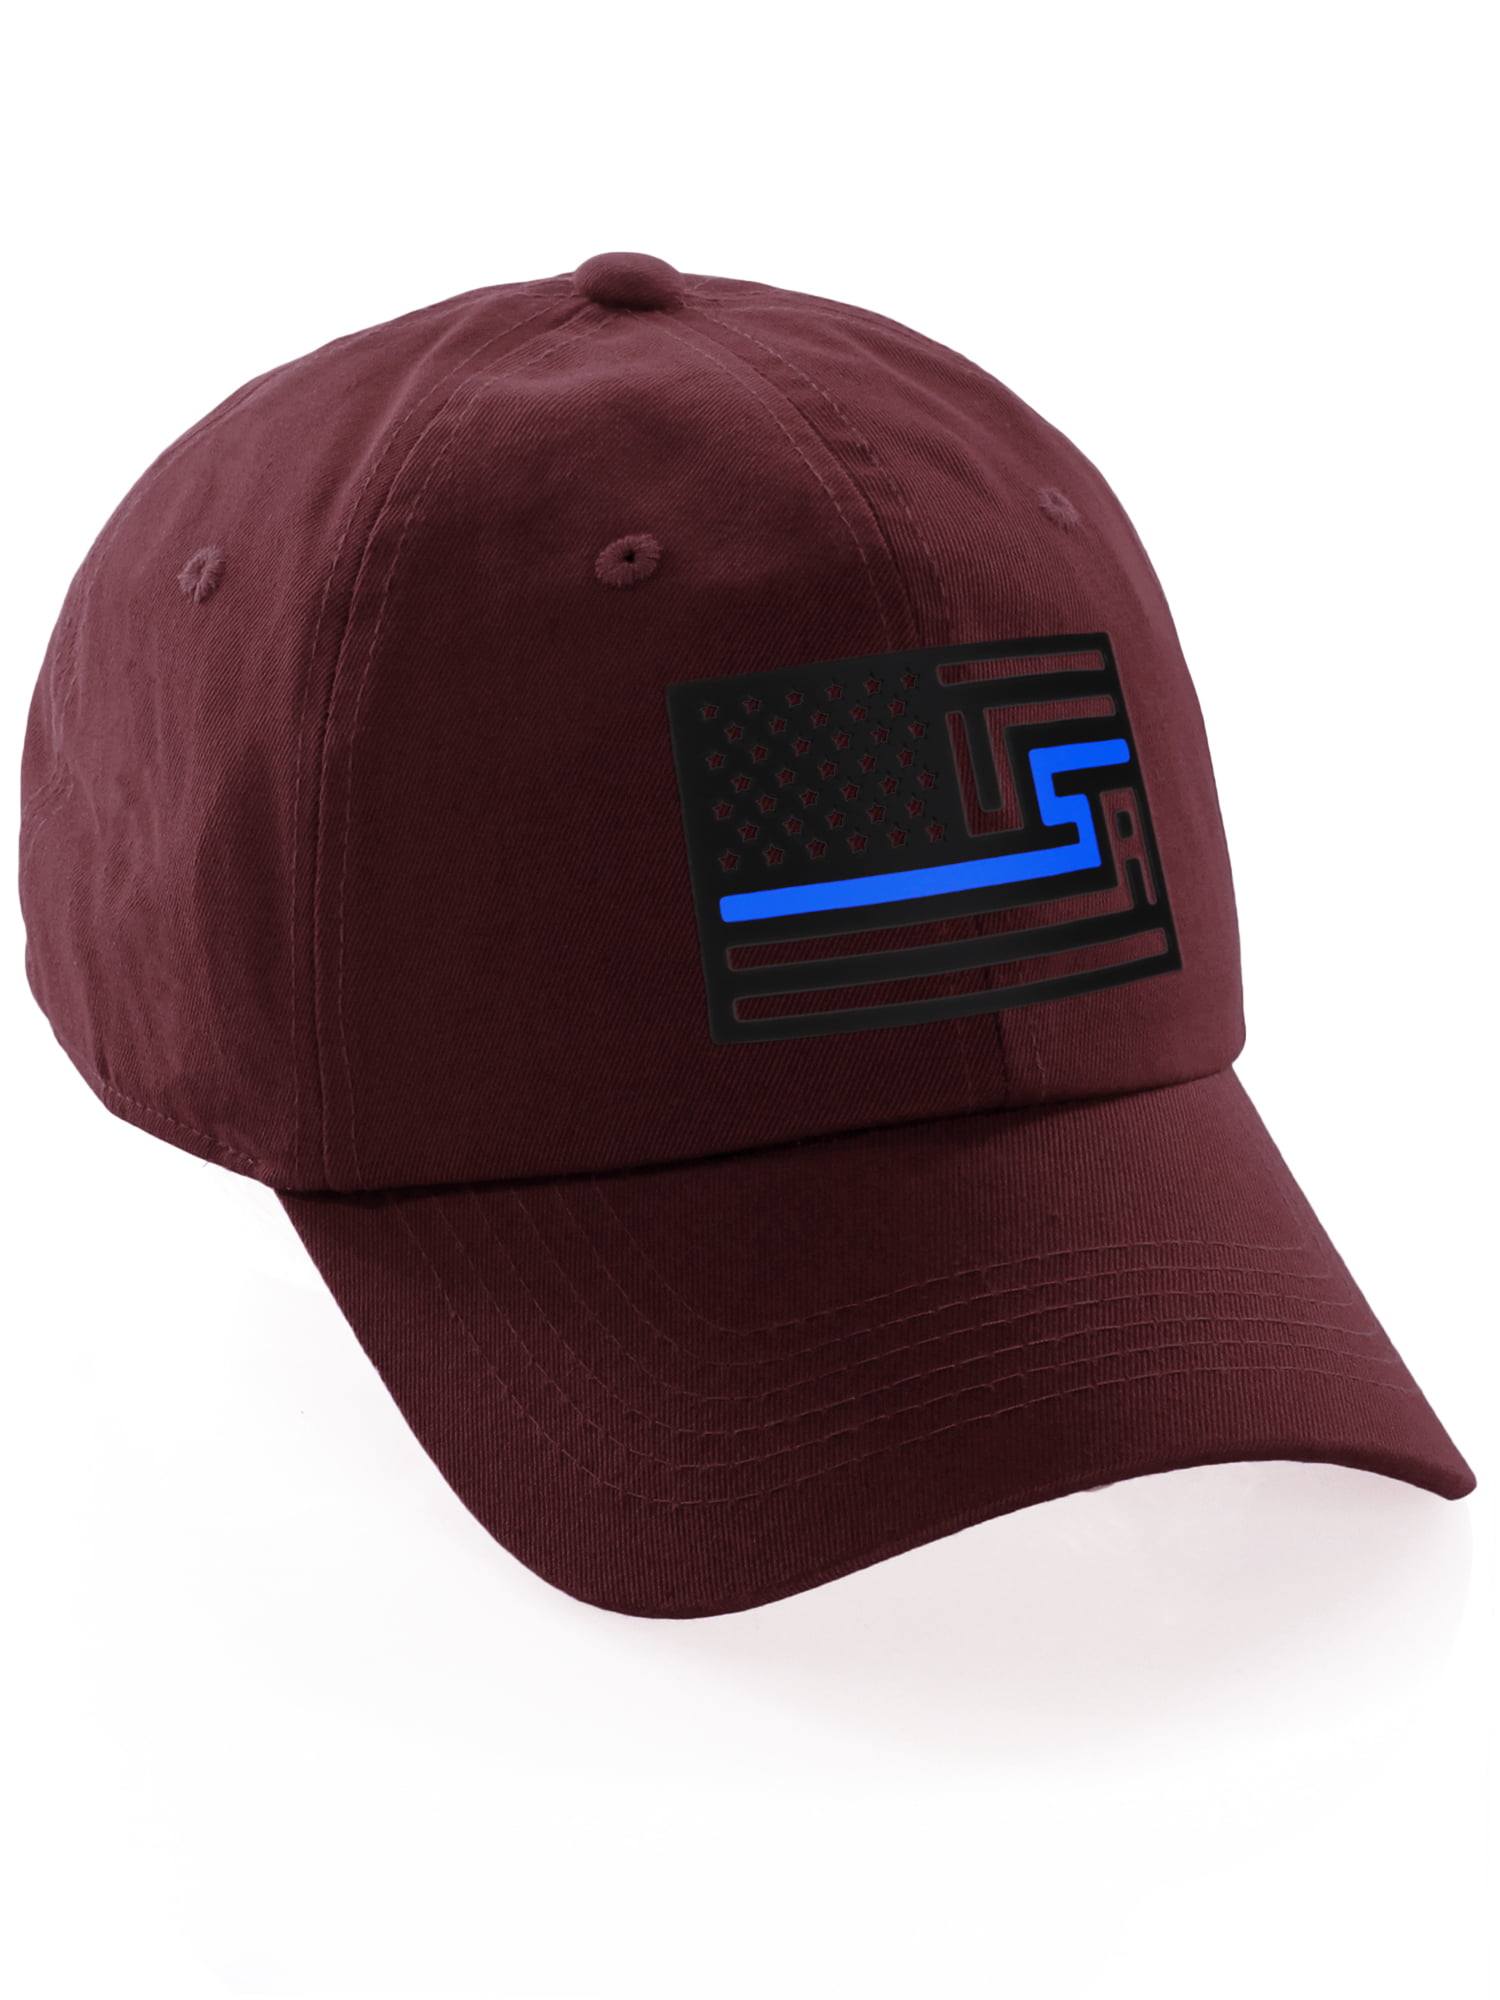 Black USA Police Thin Blue Line Cap Low Profile Hat Support Law Enforcement 